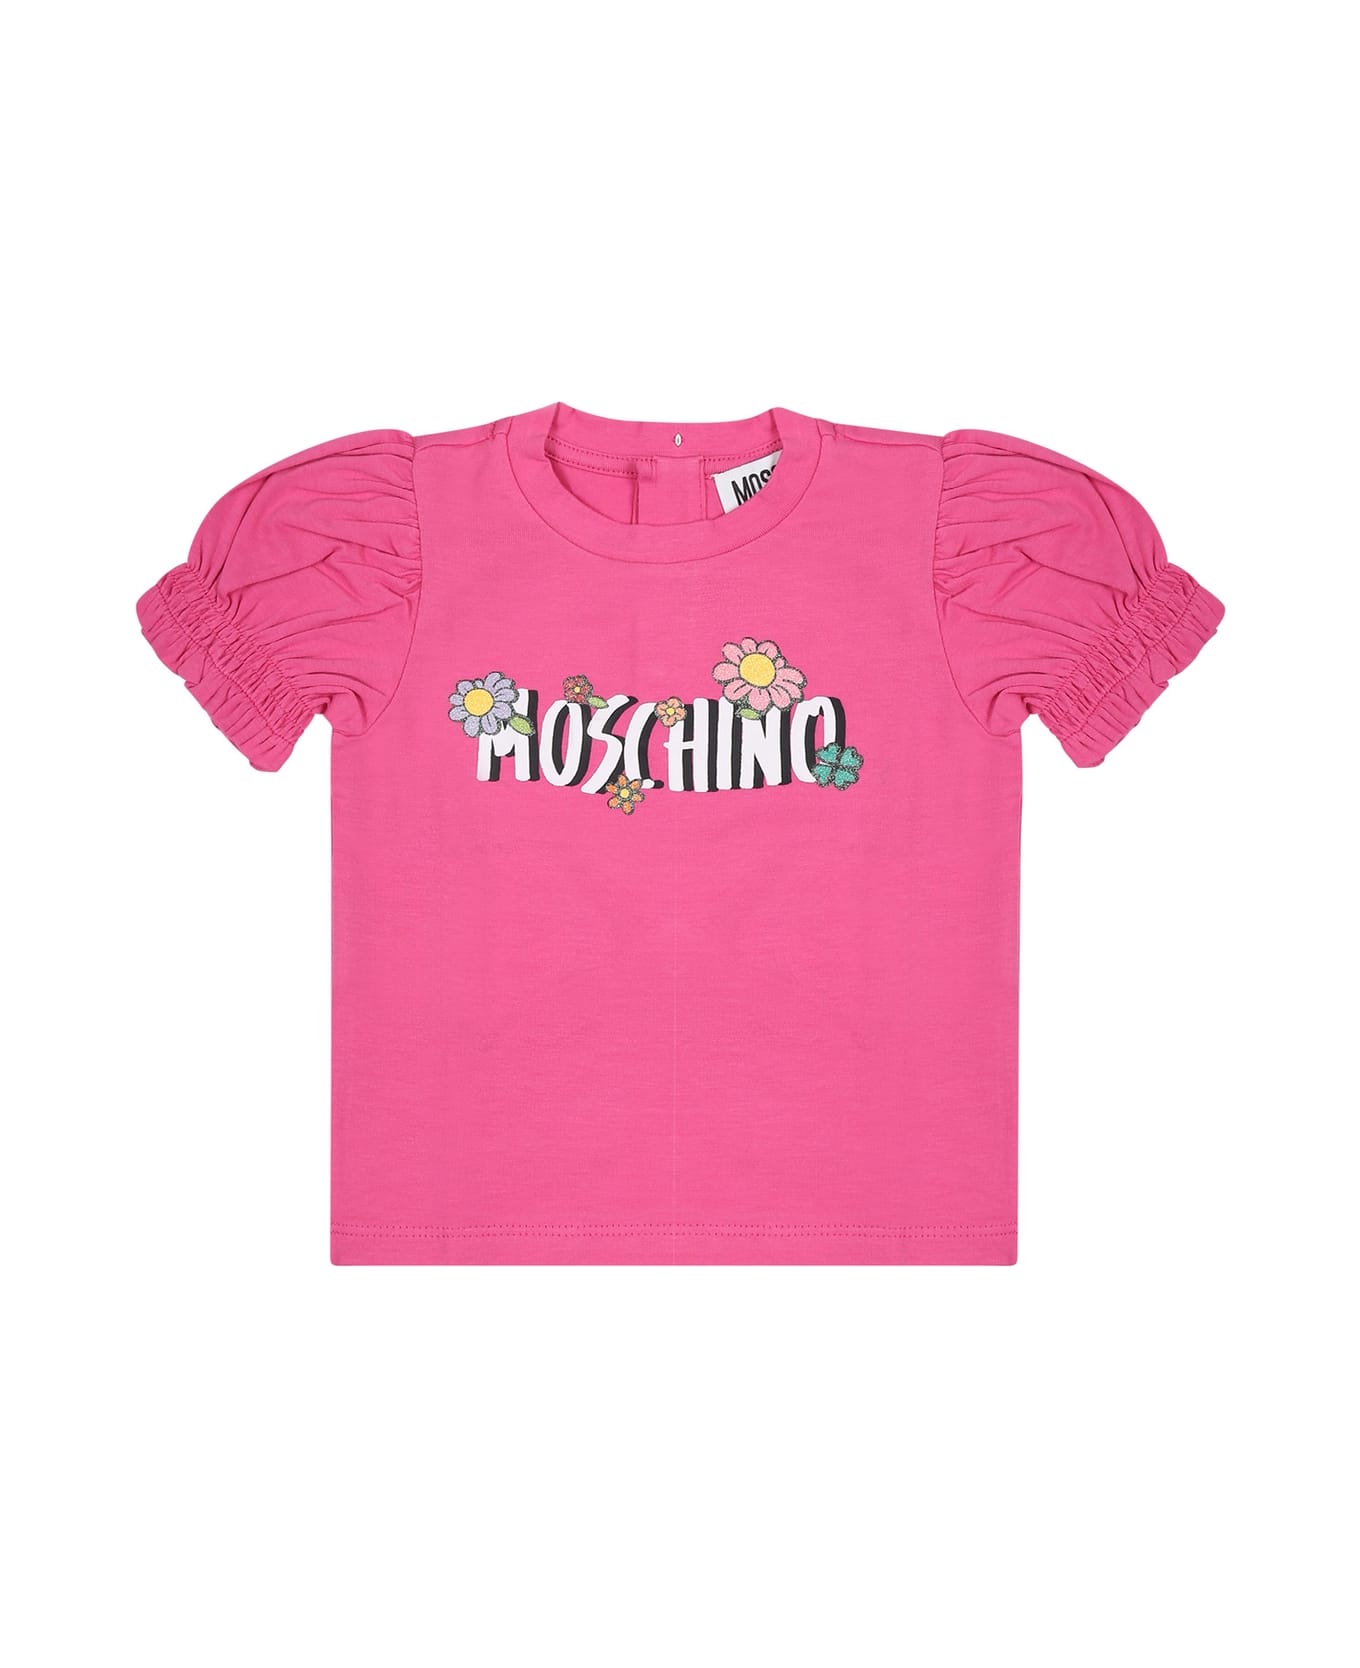 Moschino Fuchsia T-shirt For Baby Girl With Logo And Flowers - Fuchsia